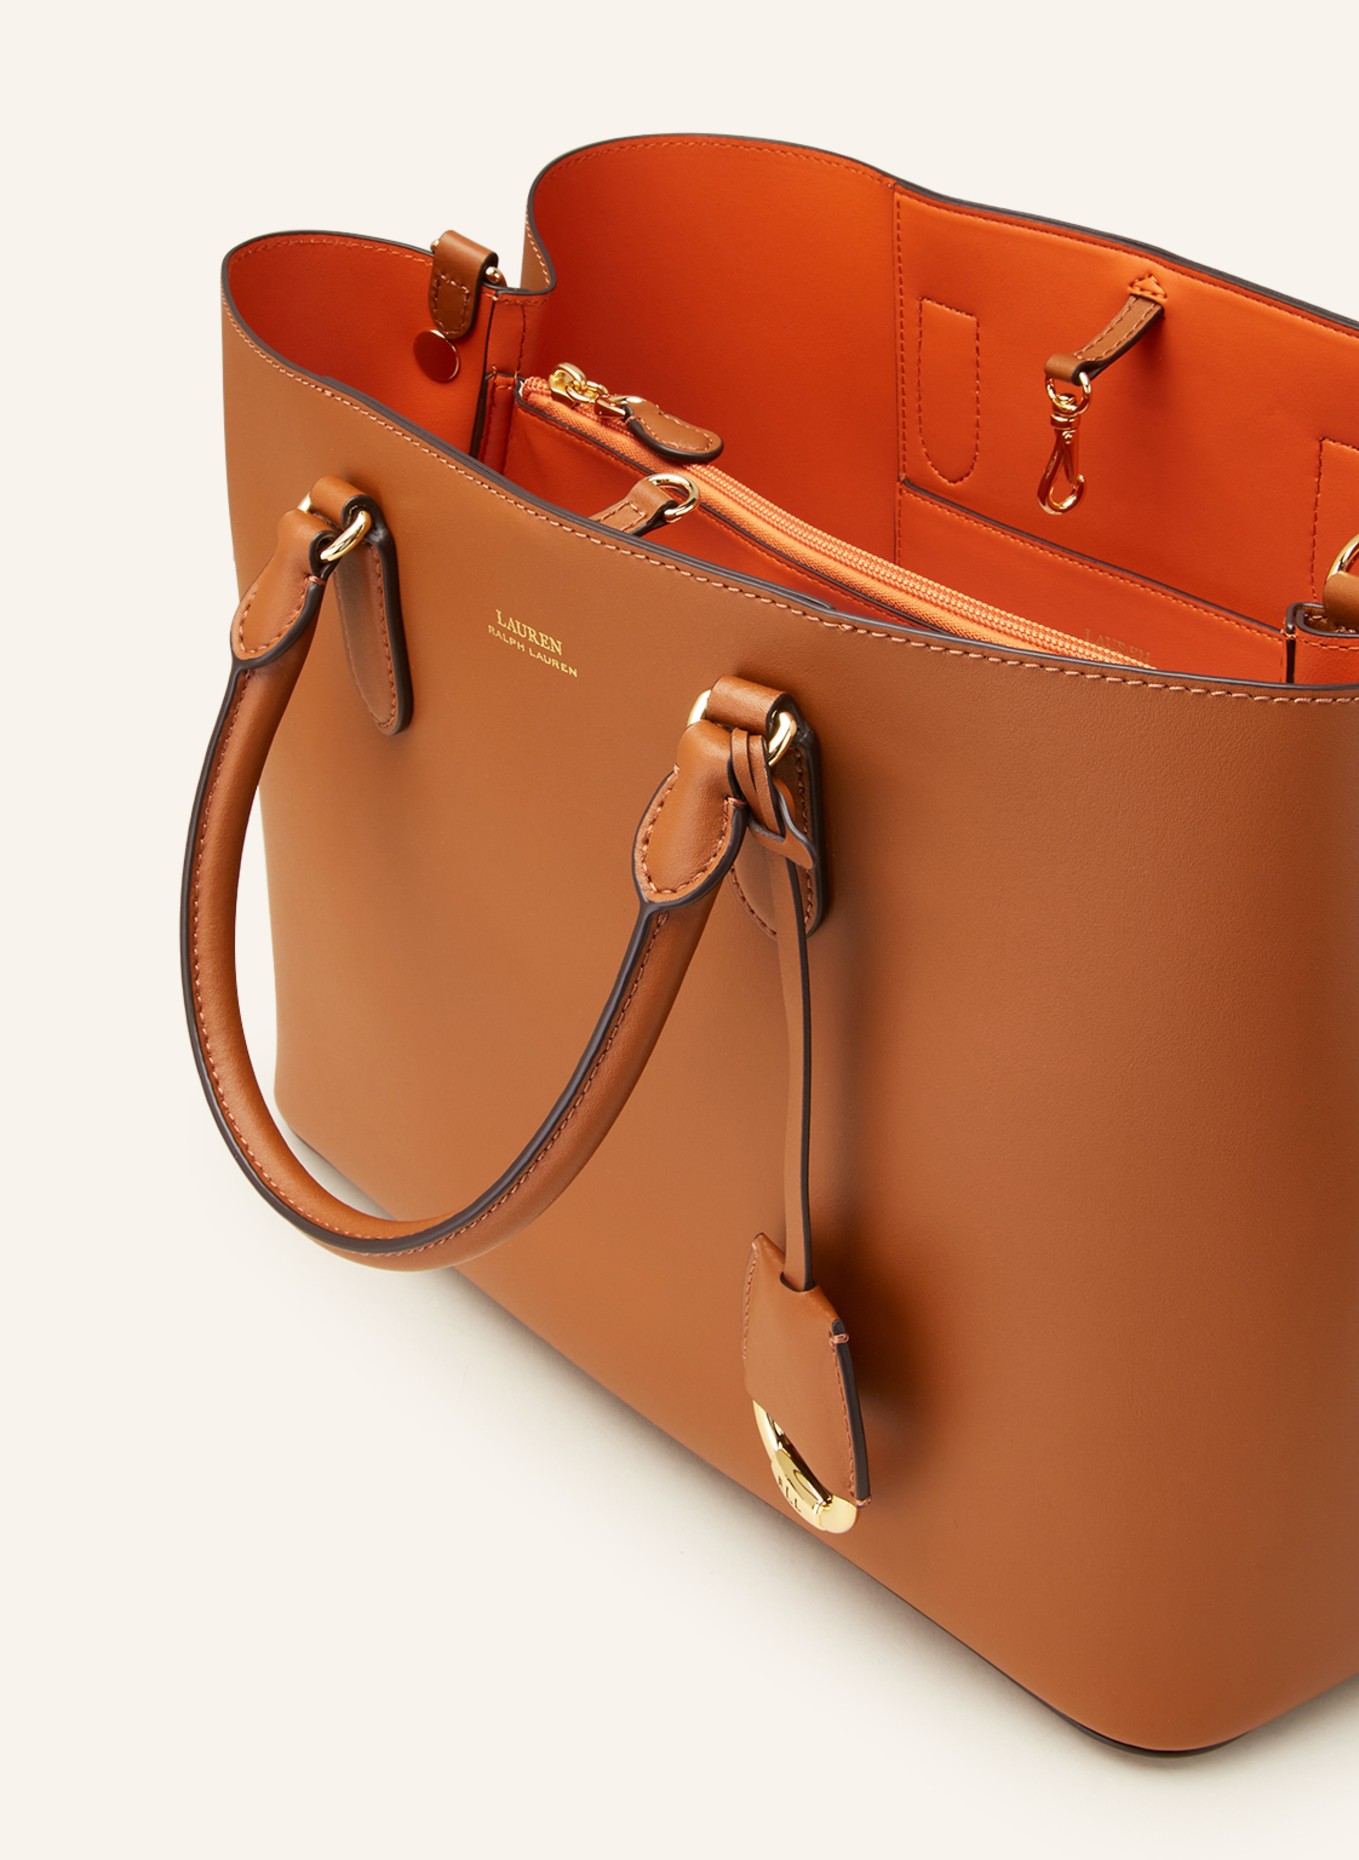 Polo Ralph Lauren: Pre-Spring 2022 | Ankle wrap sandals, Women's  accessories, Bucket bag